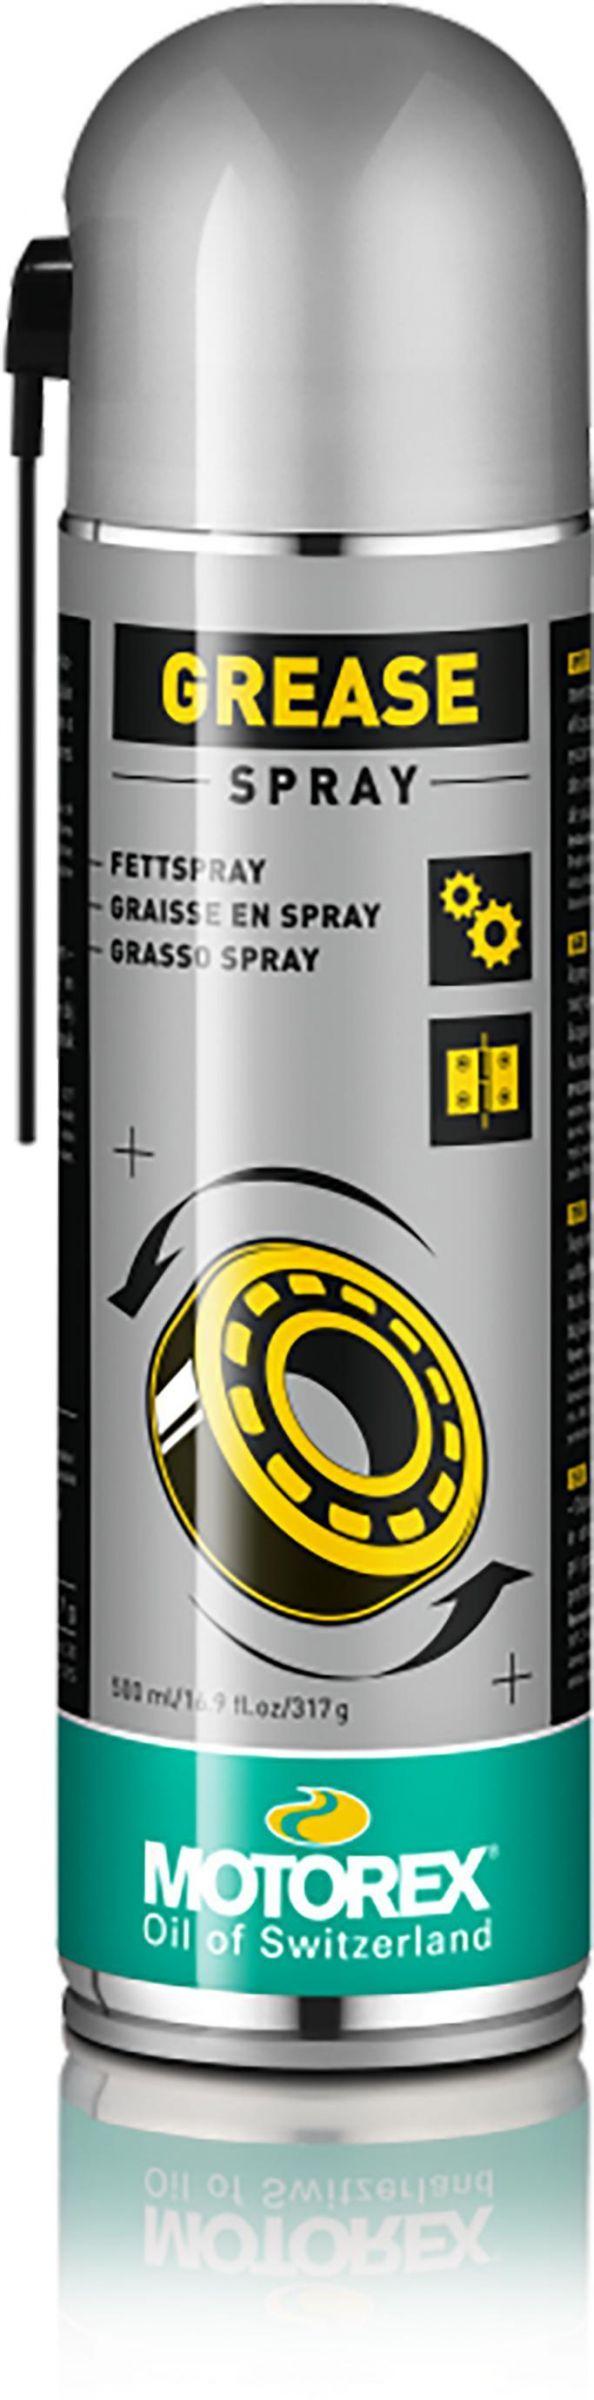 57S1-MOTOREX-108198 Grease Spray - 500 ml. Aerosol